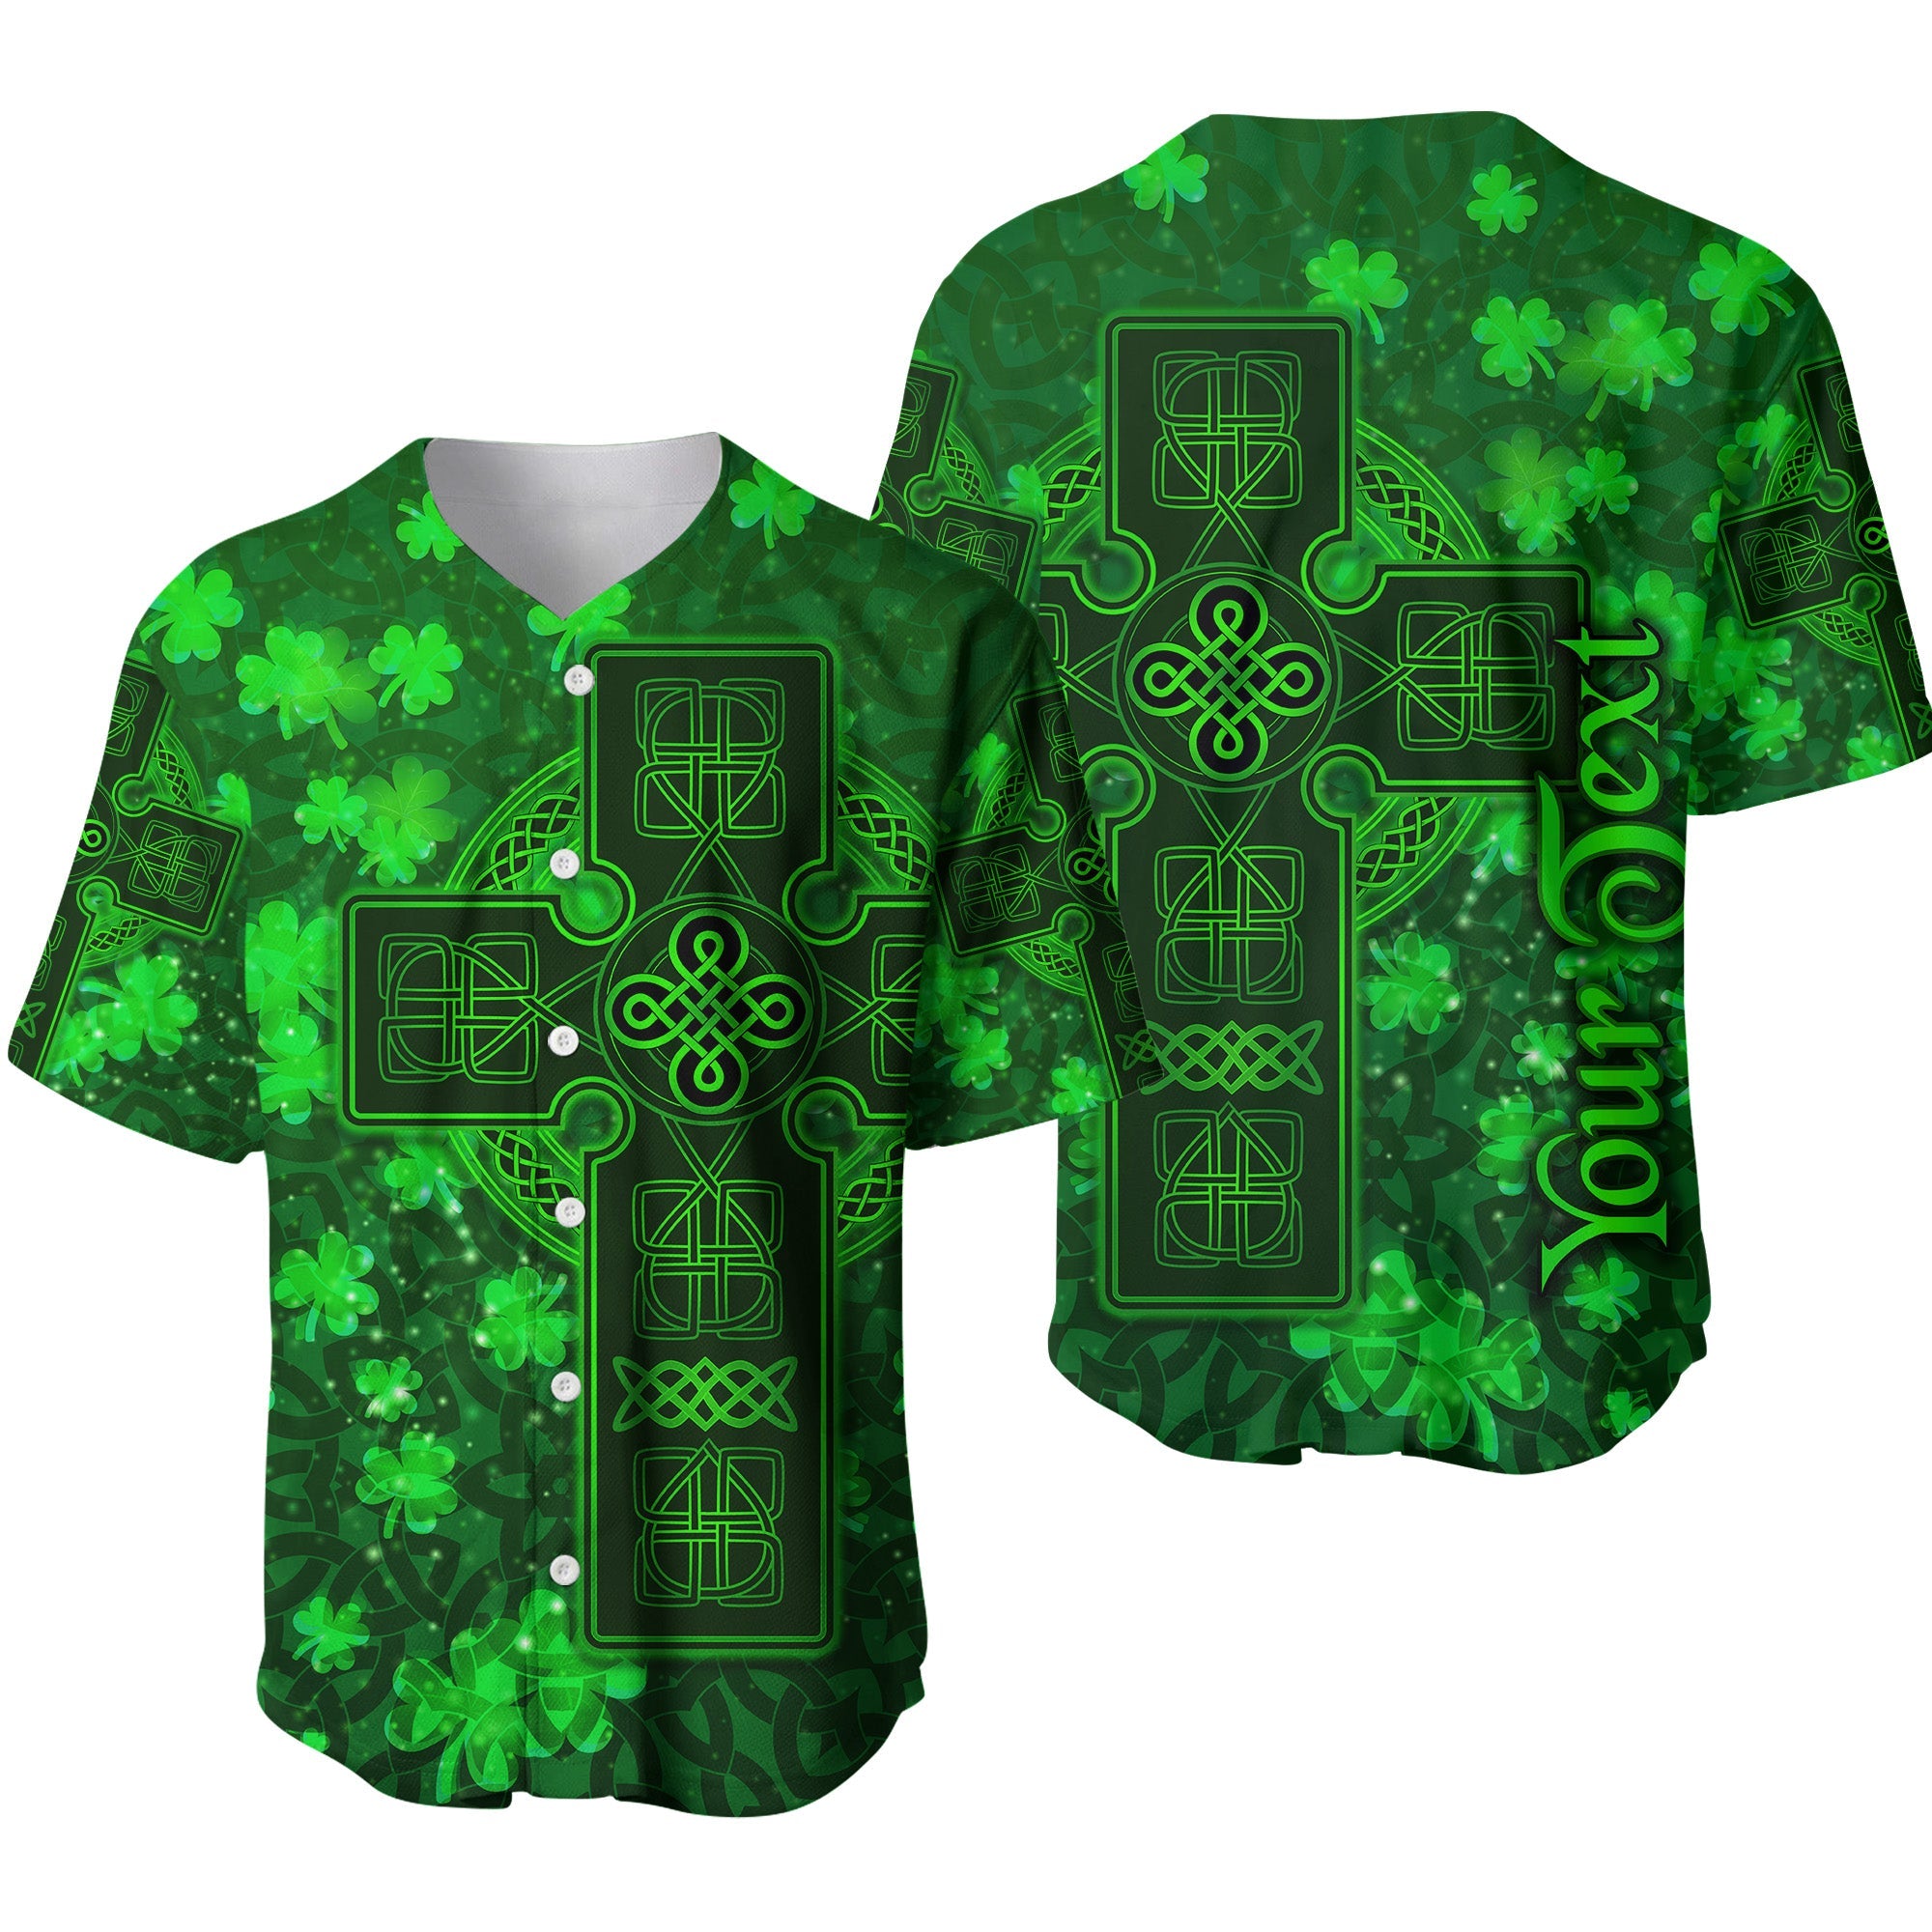 custom-personalised-celtic-cross-baseball-jersey-with-shamrock-simple-style